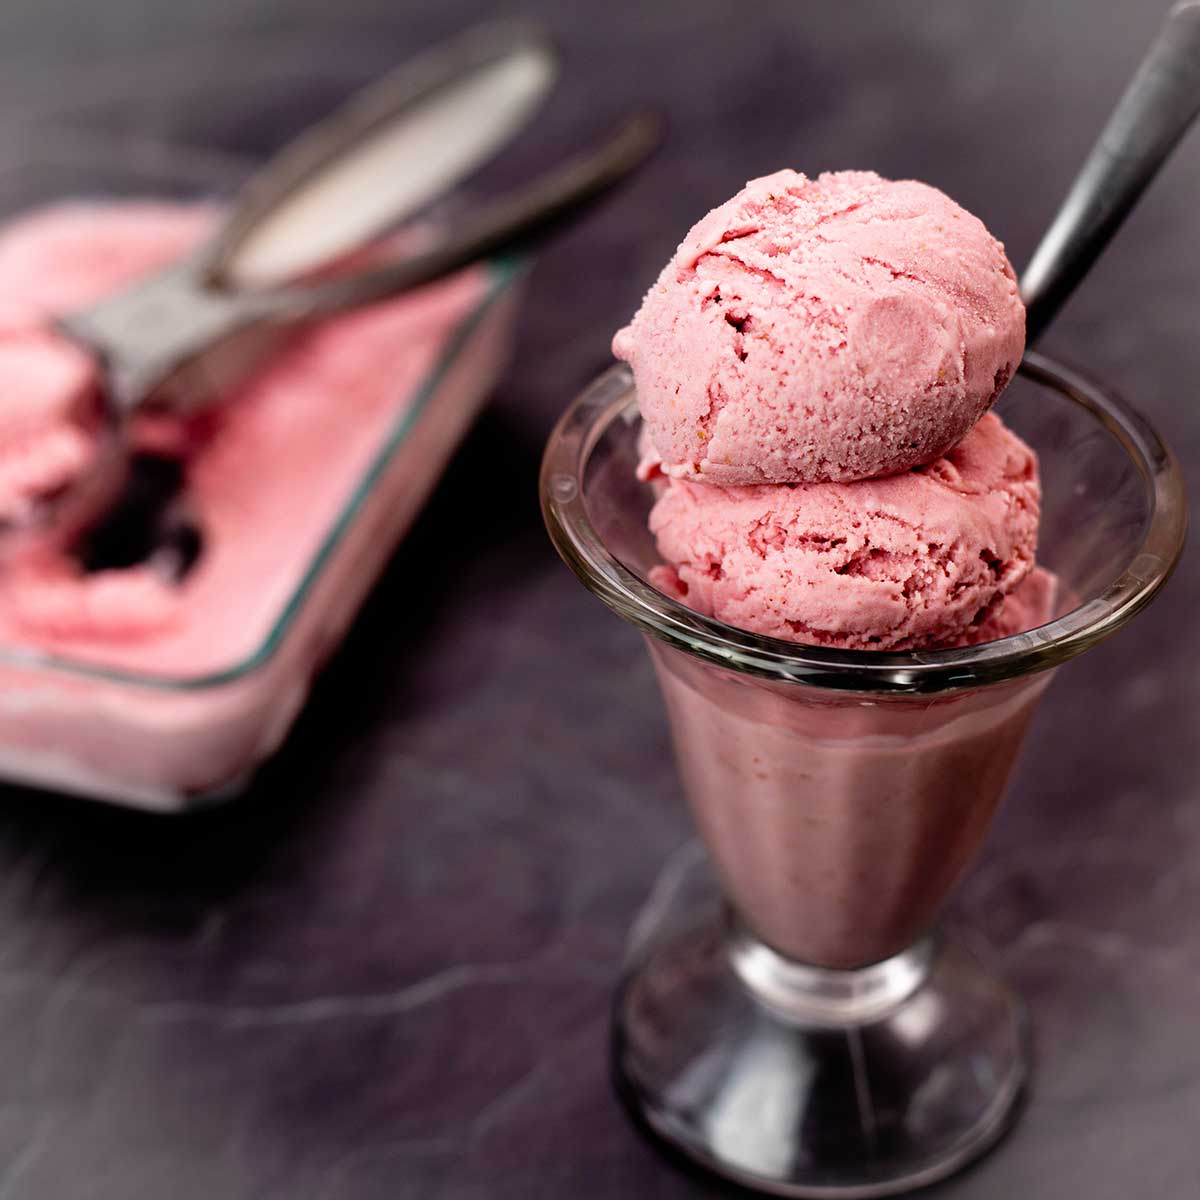 https://thesaltedpepper.com/wp-content/uploads/2020/08/Strawberry-Ice-cream-Blender-sq-1.jpg